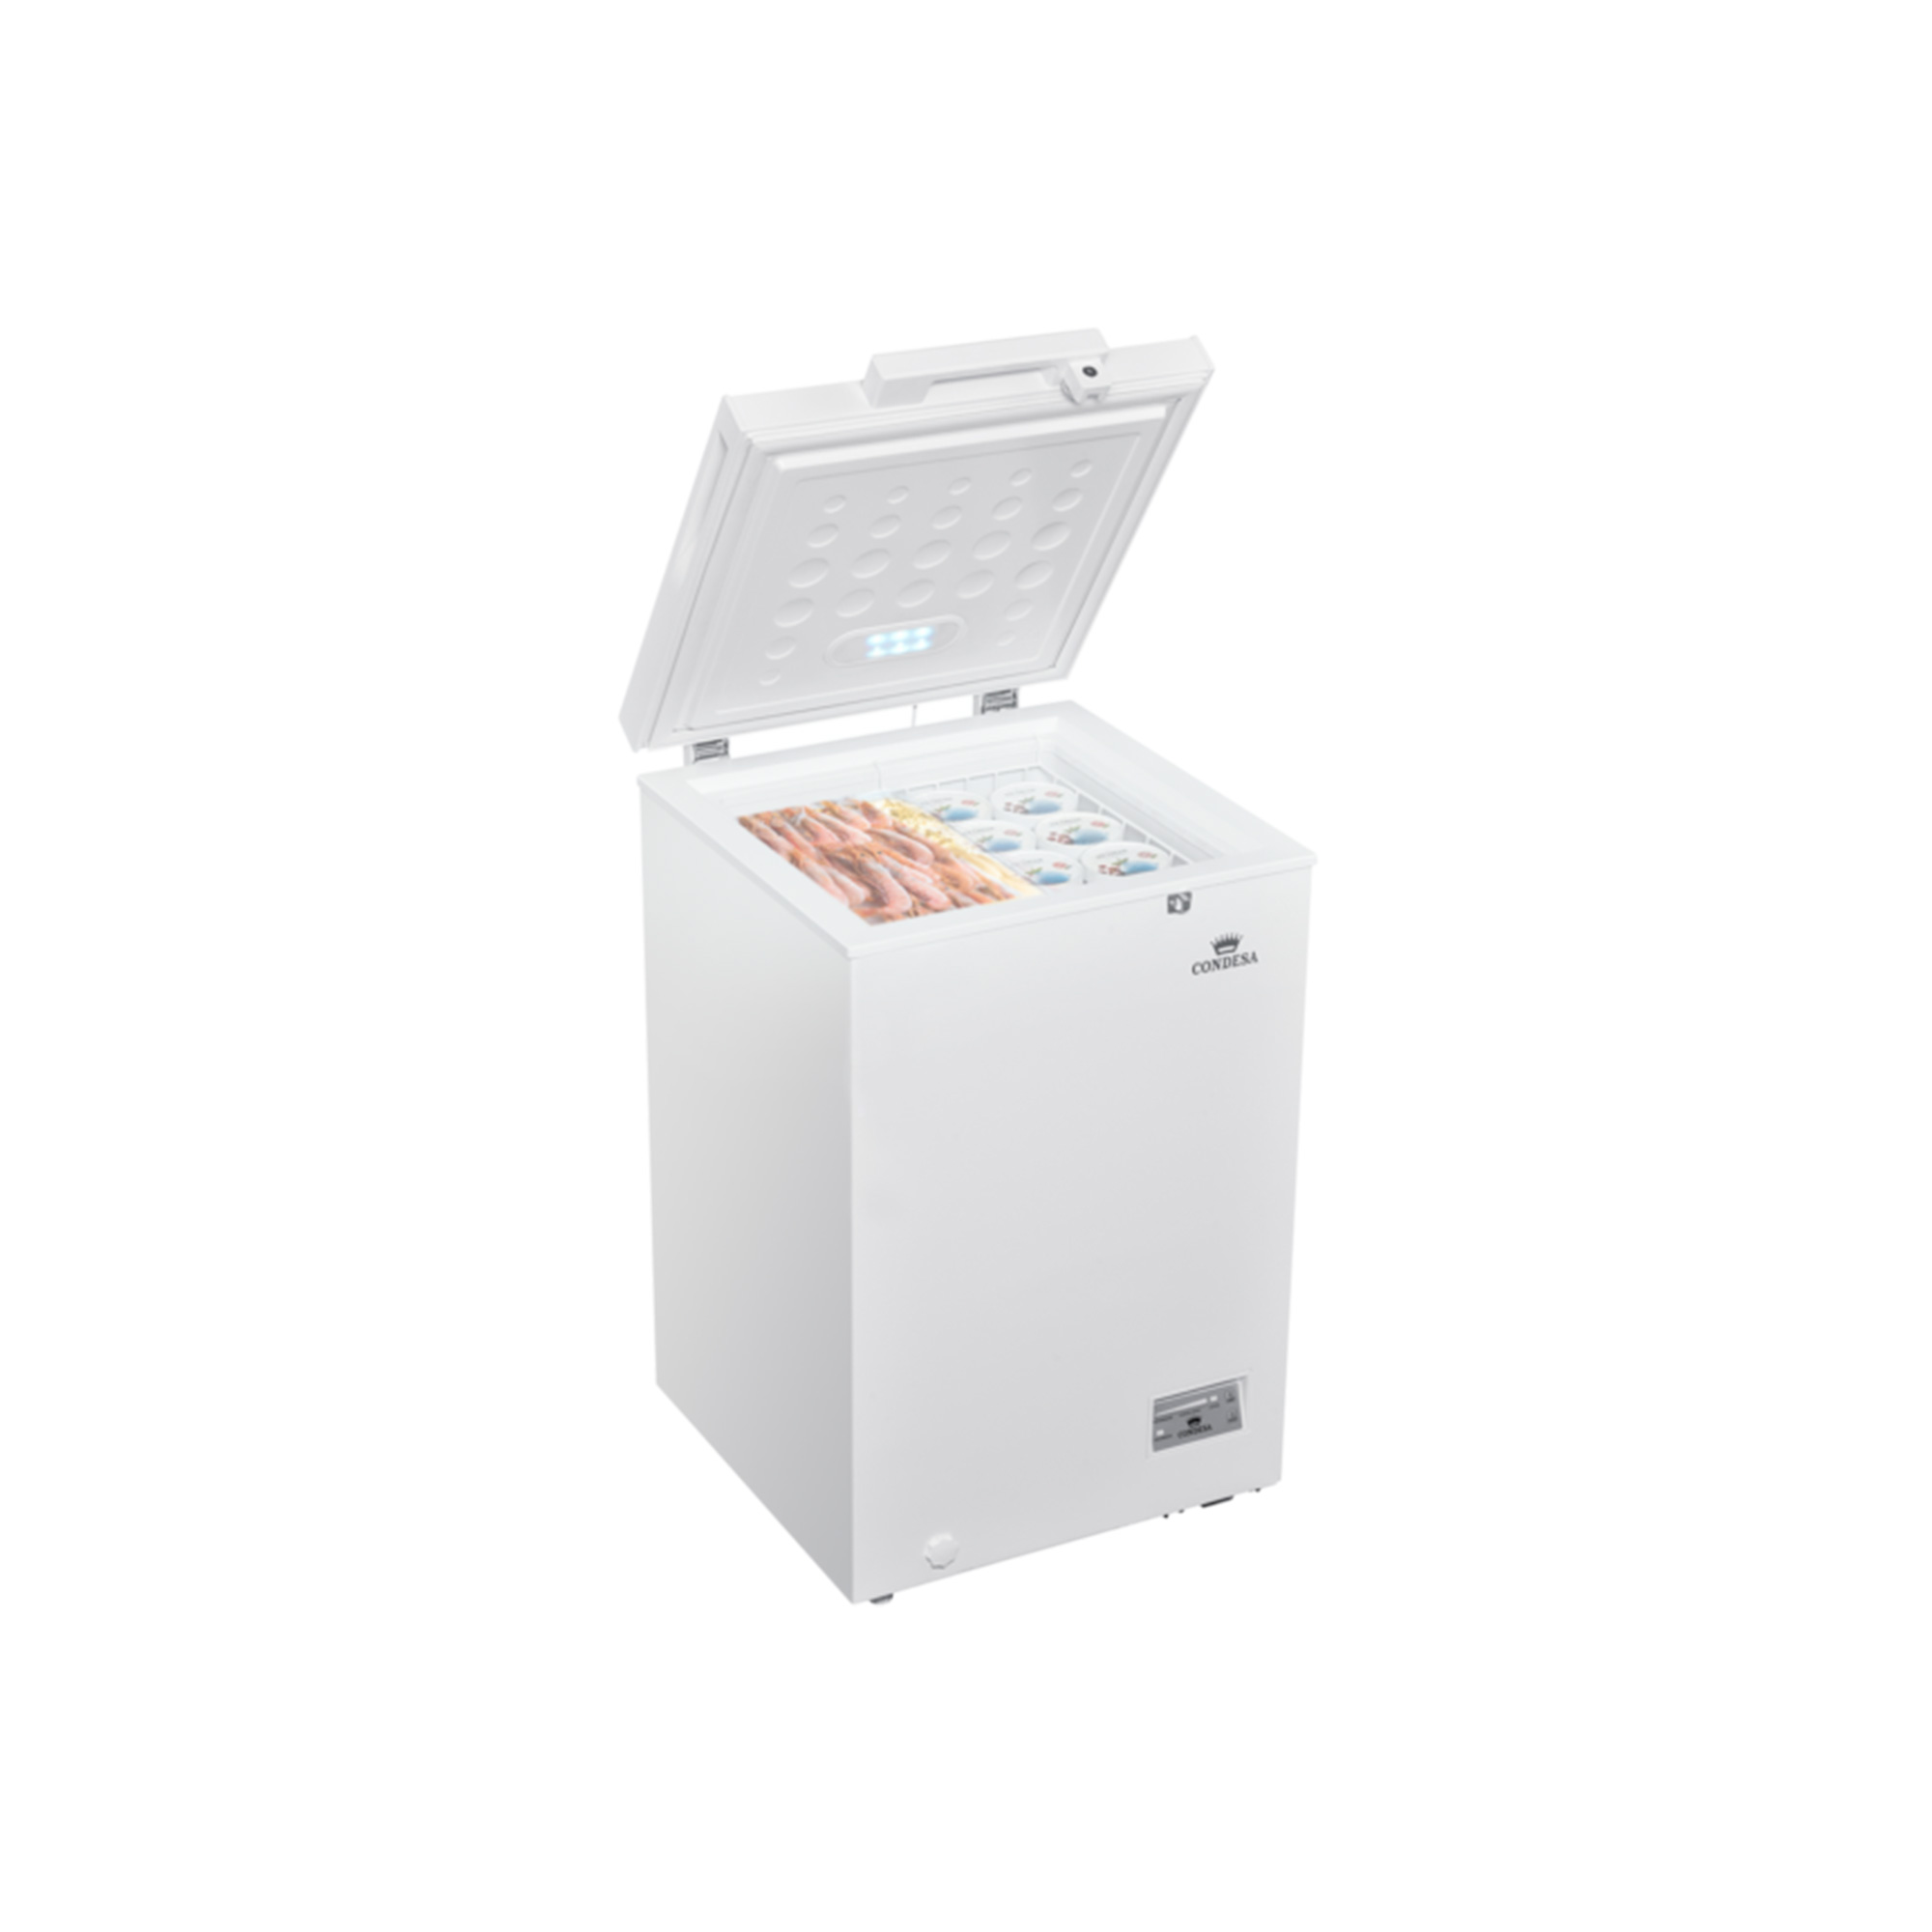 Congelador digital Condesa 110L - Multimax Store